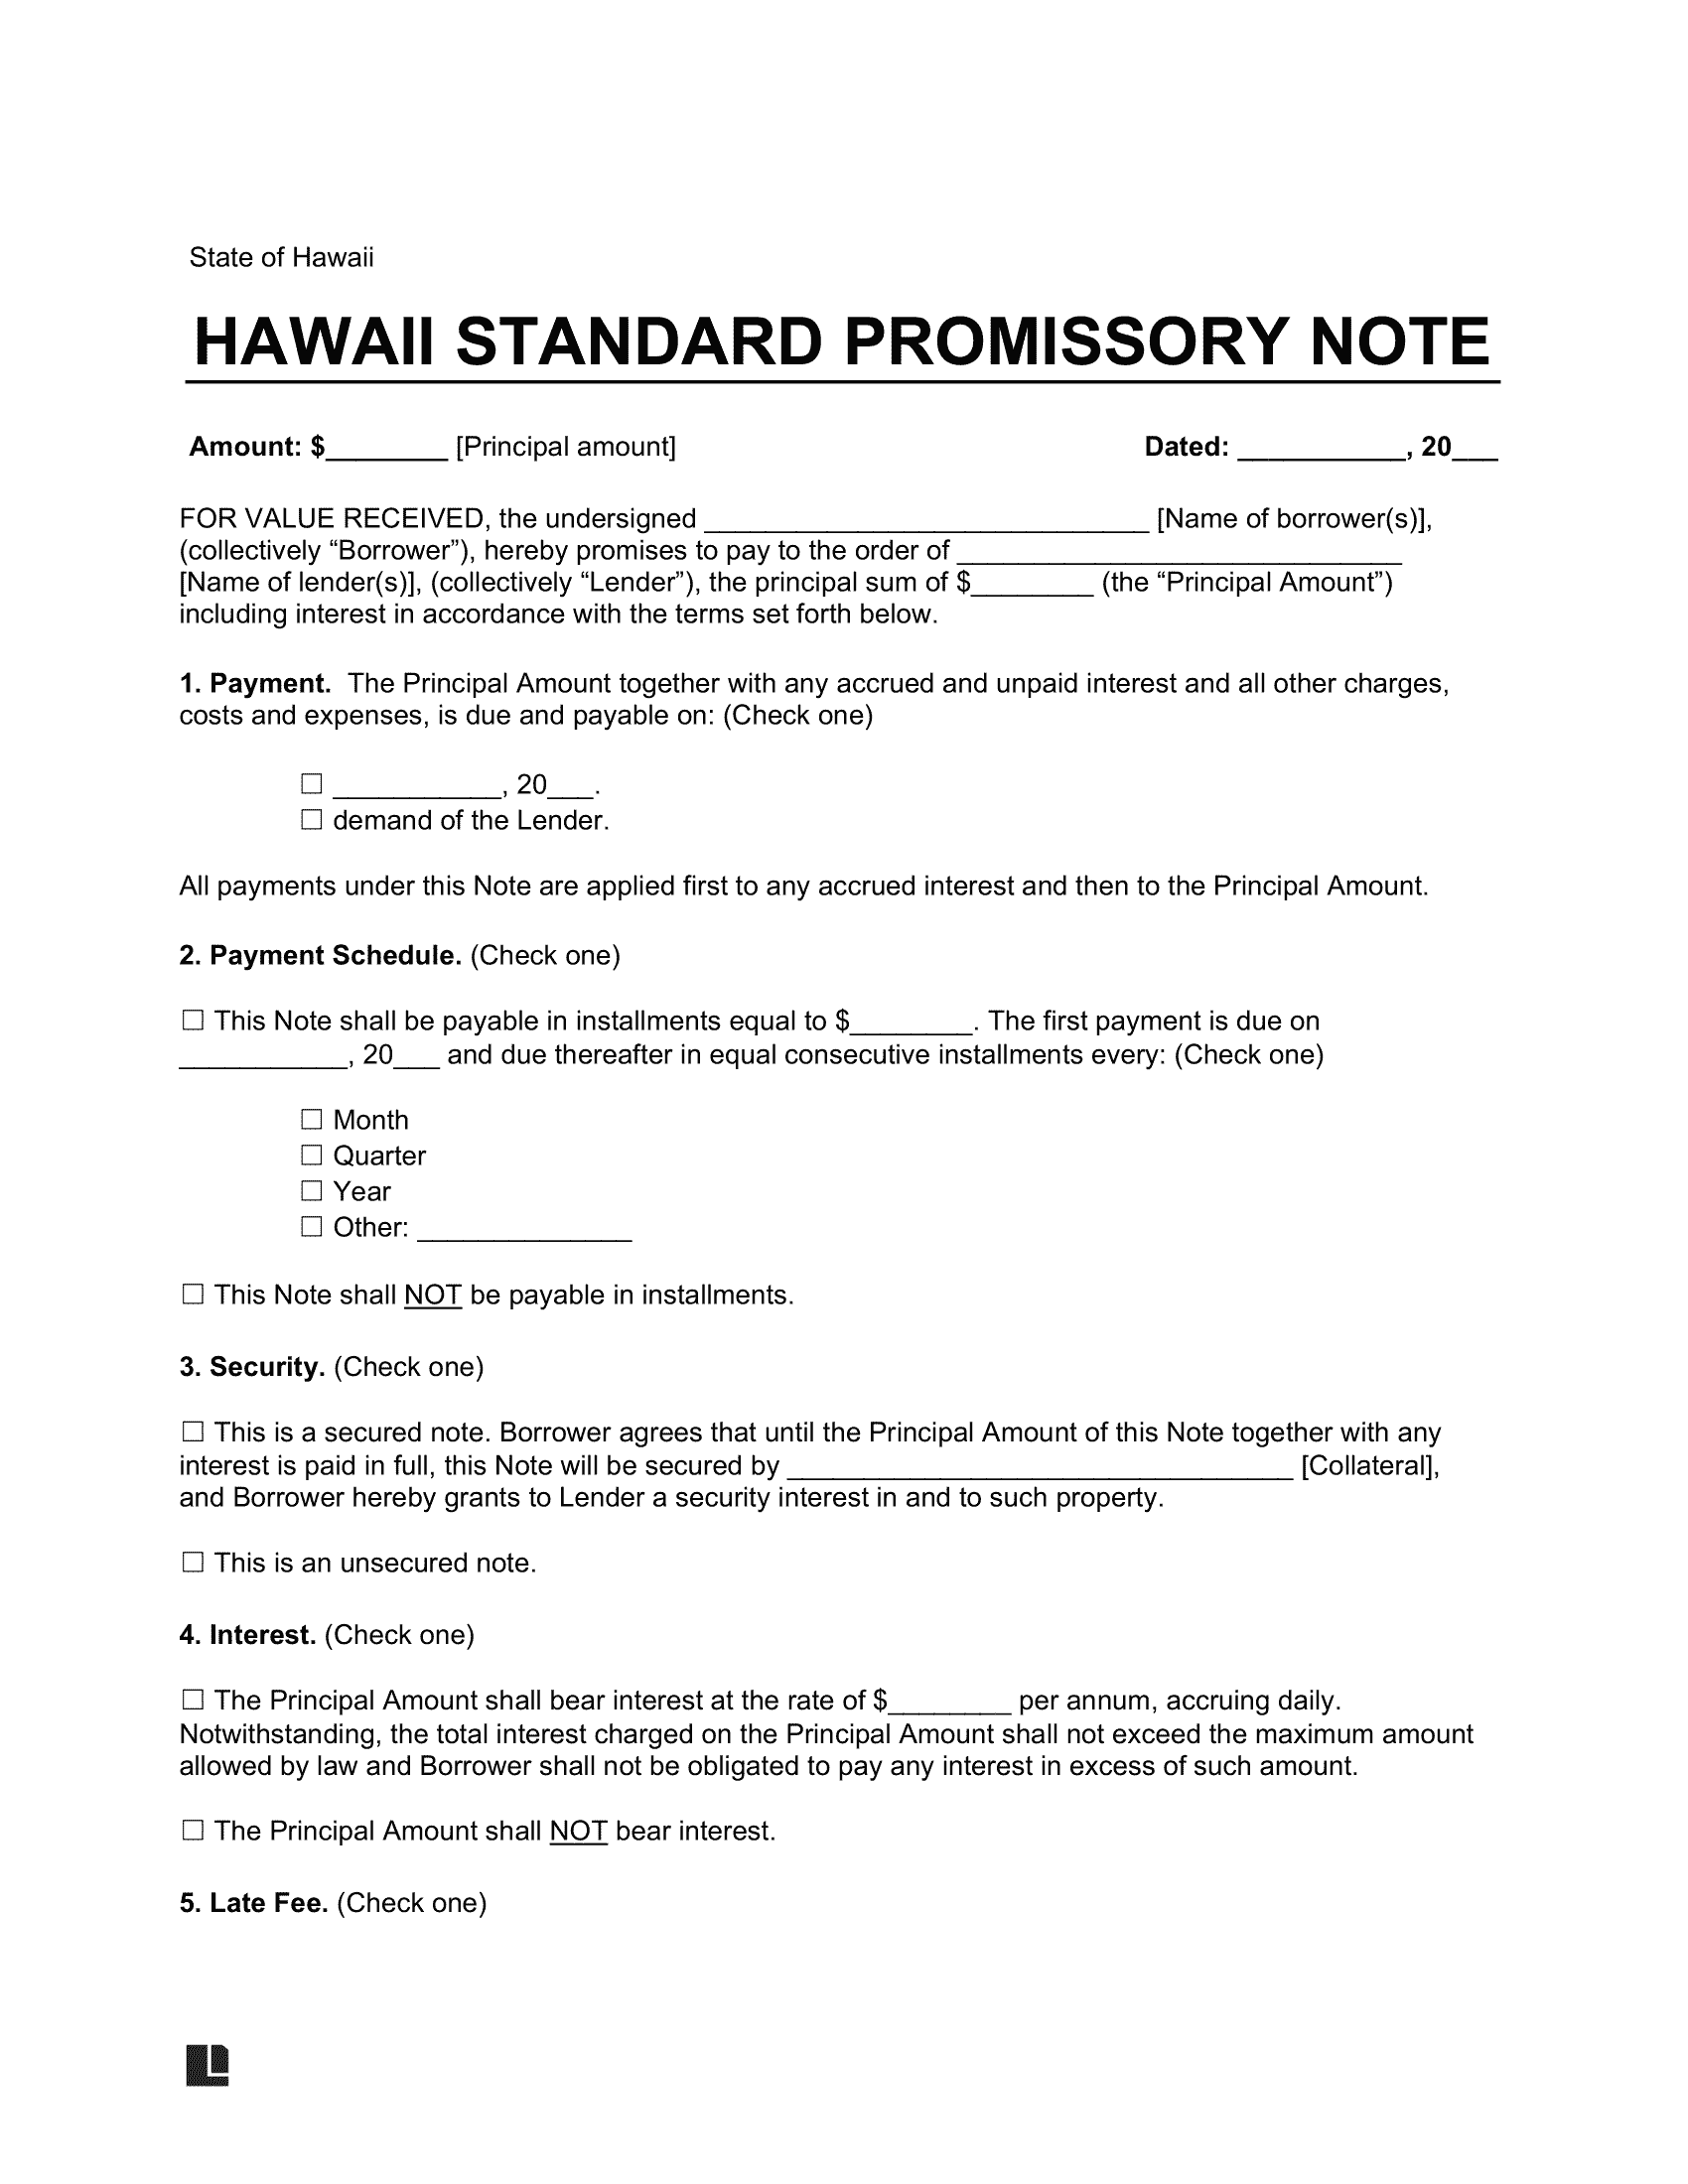 Hawaii Standard Promissory Note Template